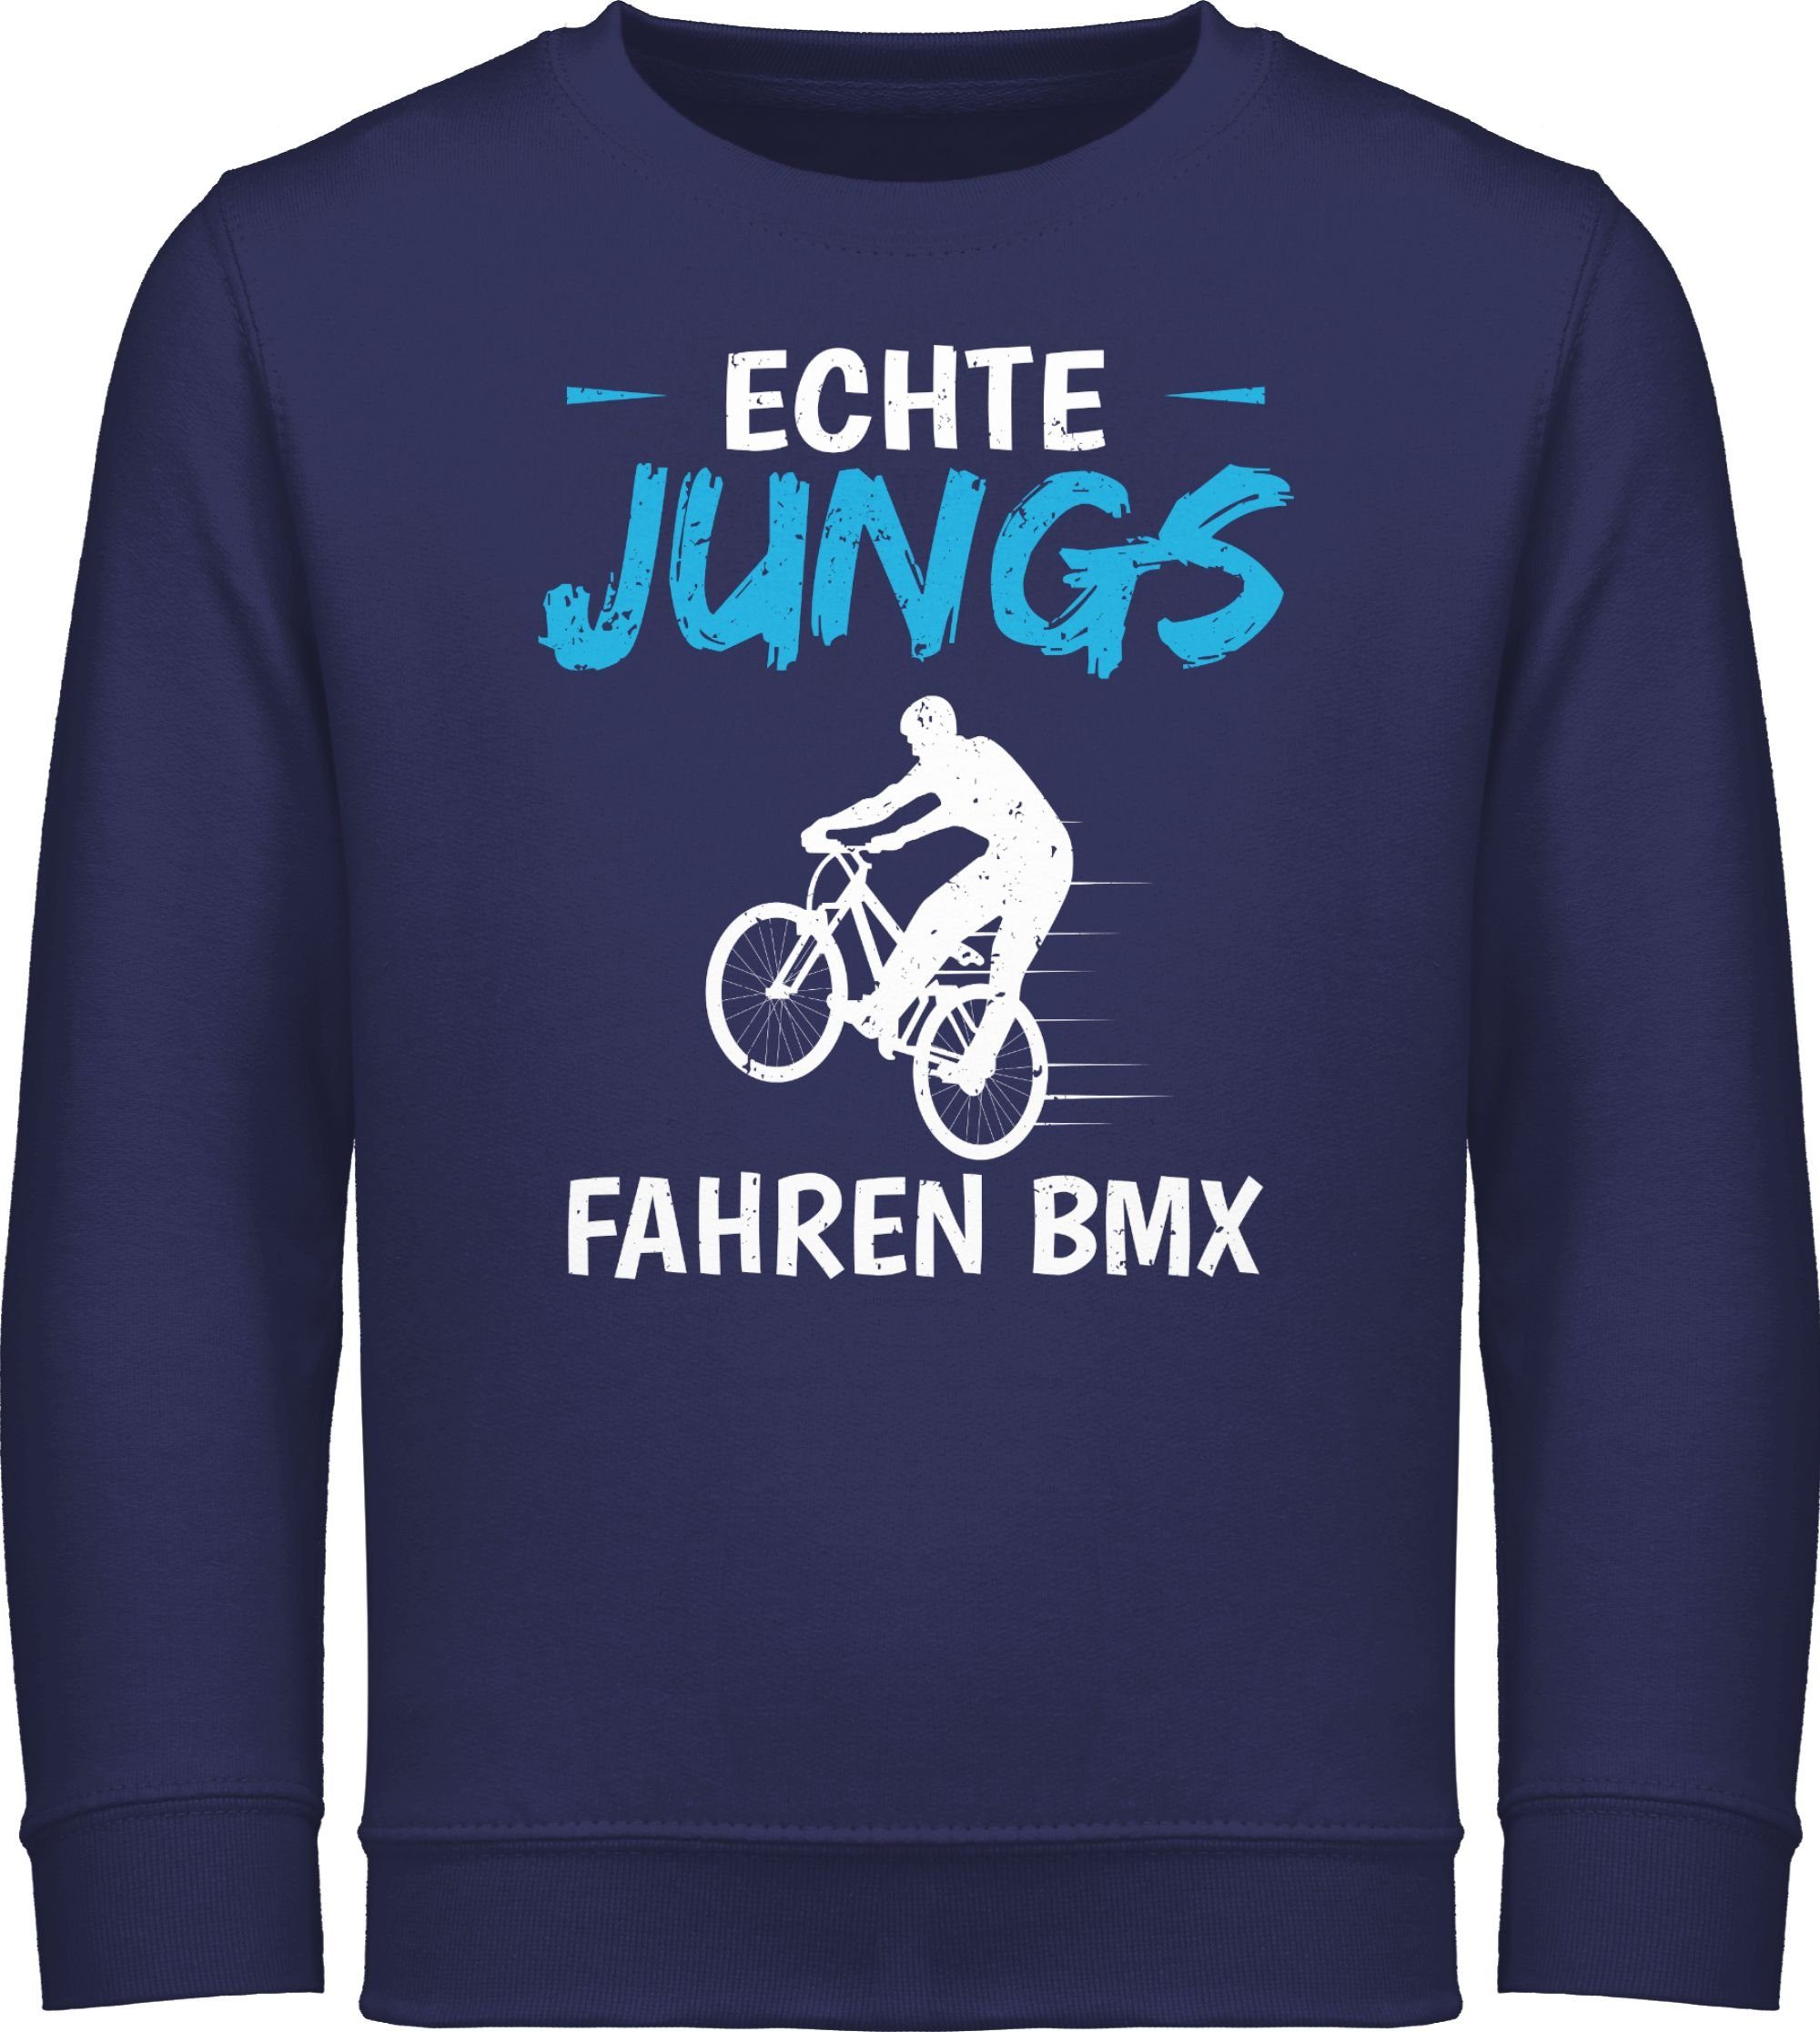 Shirtracer Sweatshirt Echte Jungs fahren BMX Kinder Sport Kleidung 3 Navy Blau